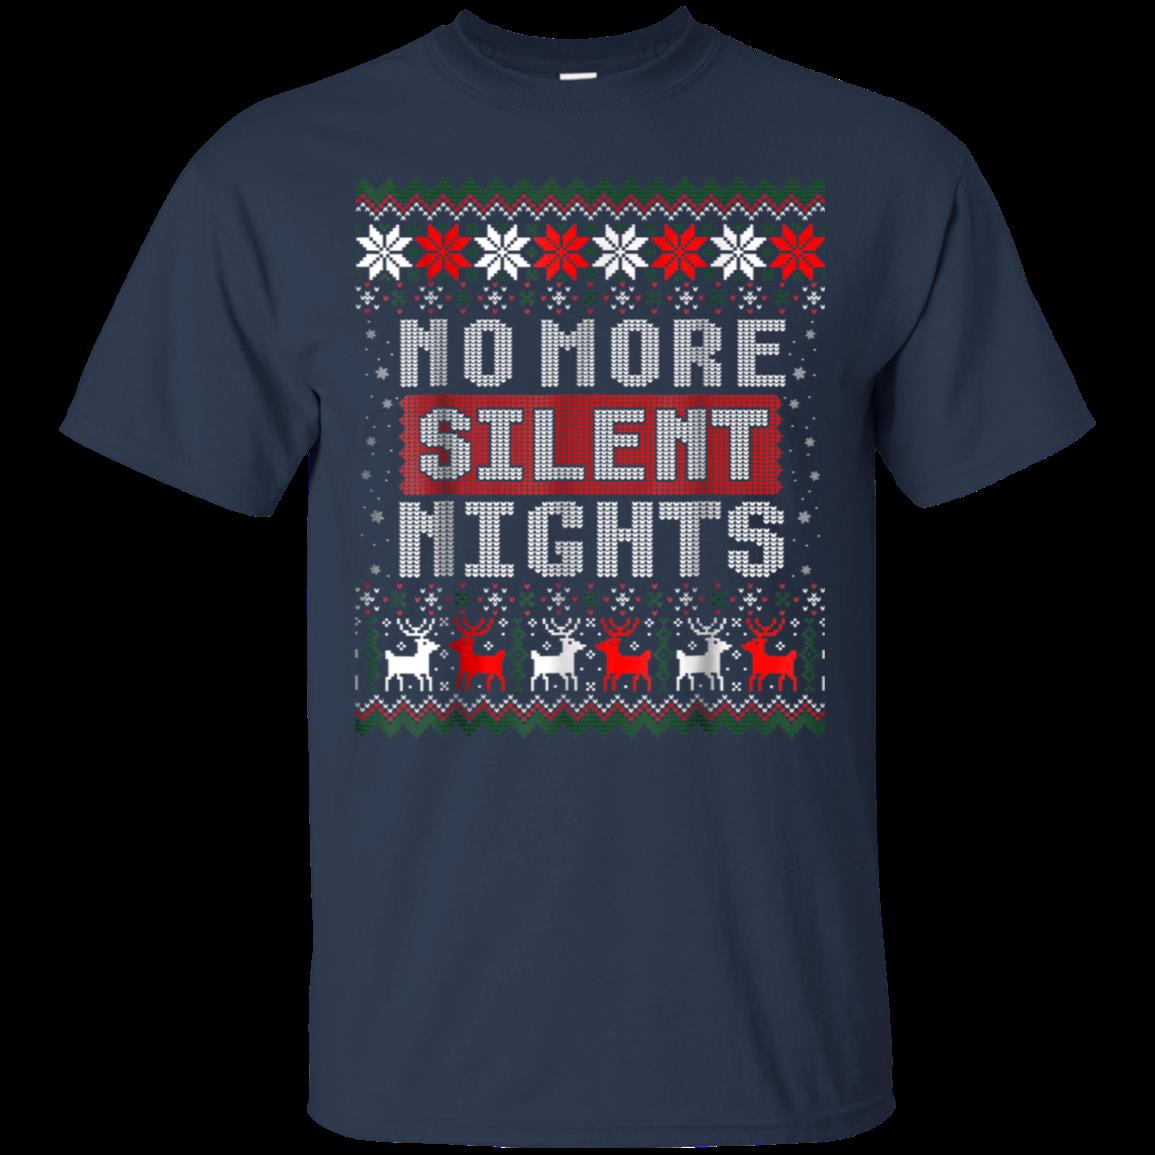 No More Silent Nights Christmas Ugly Sweaters Shirt Cotton Shirt 1